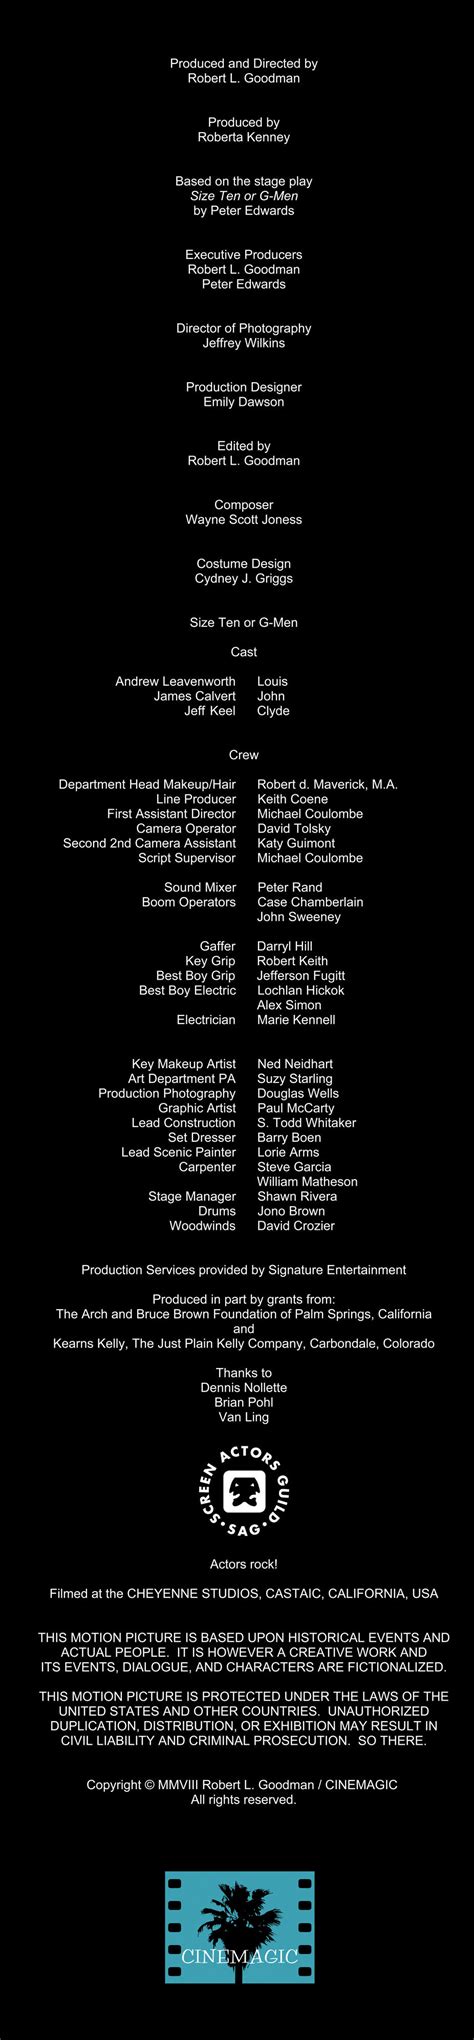 Switchblade lyrics credits, cast, crew of song